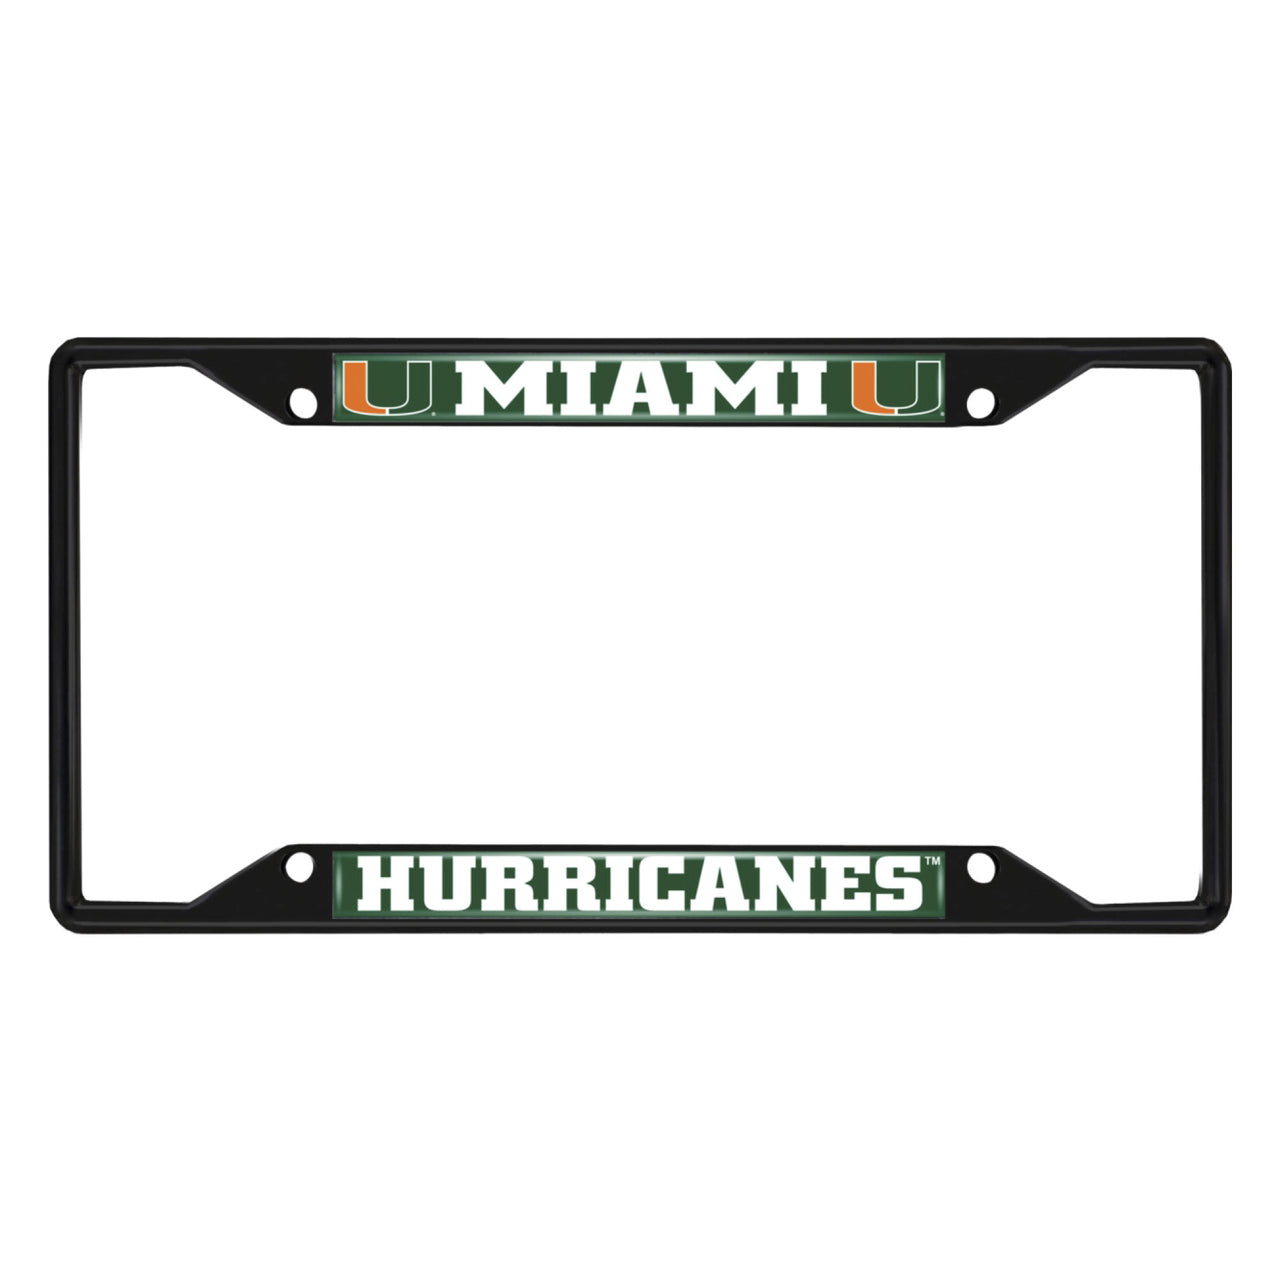 Miami Hurricanes License Plate Frame 6.25"x12.25" - Black